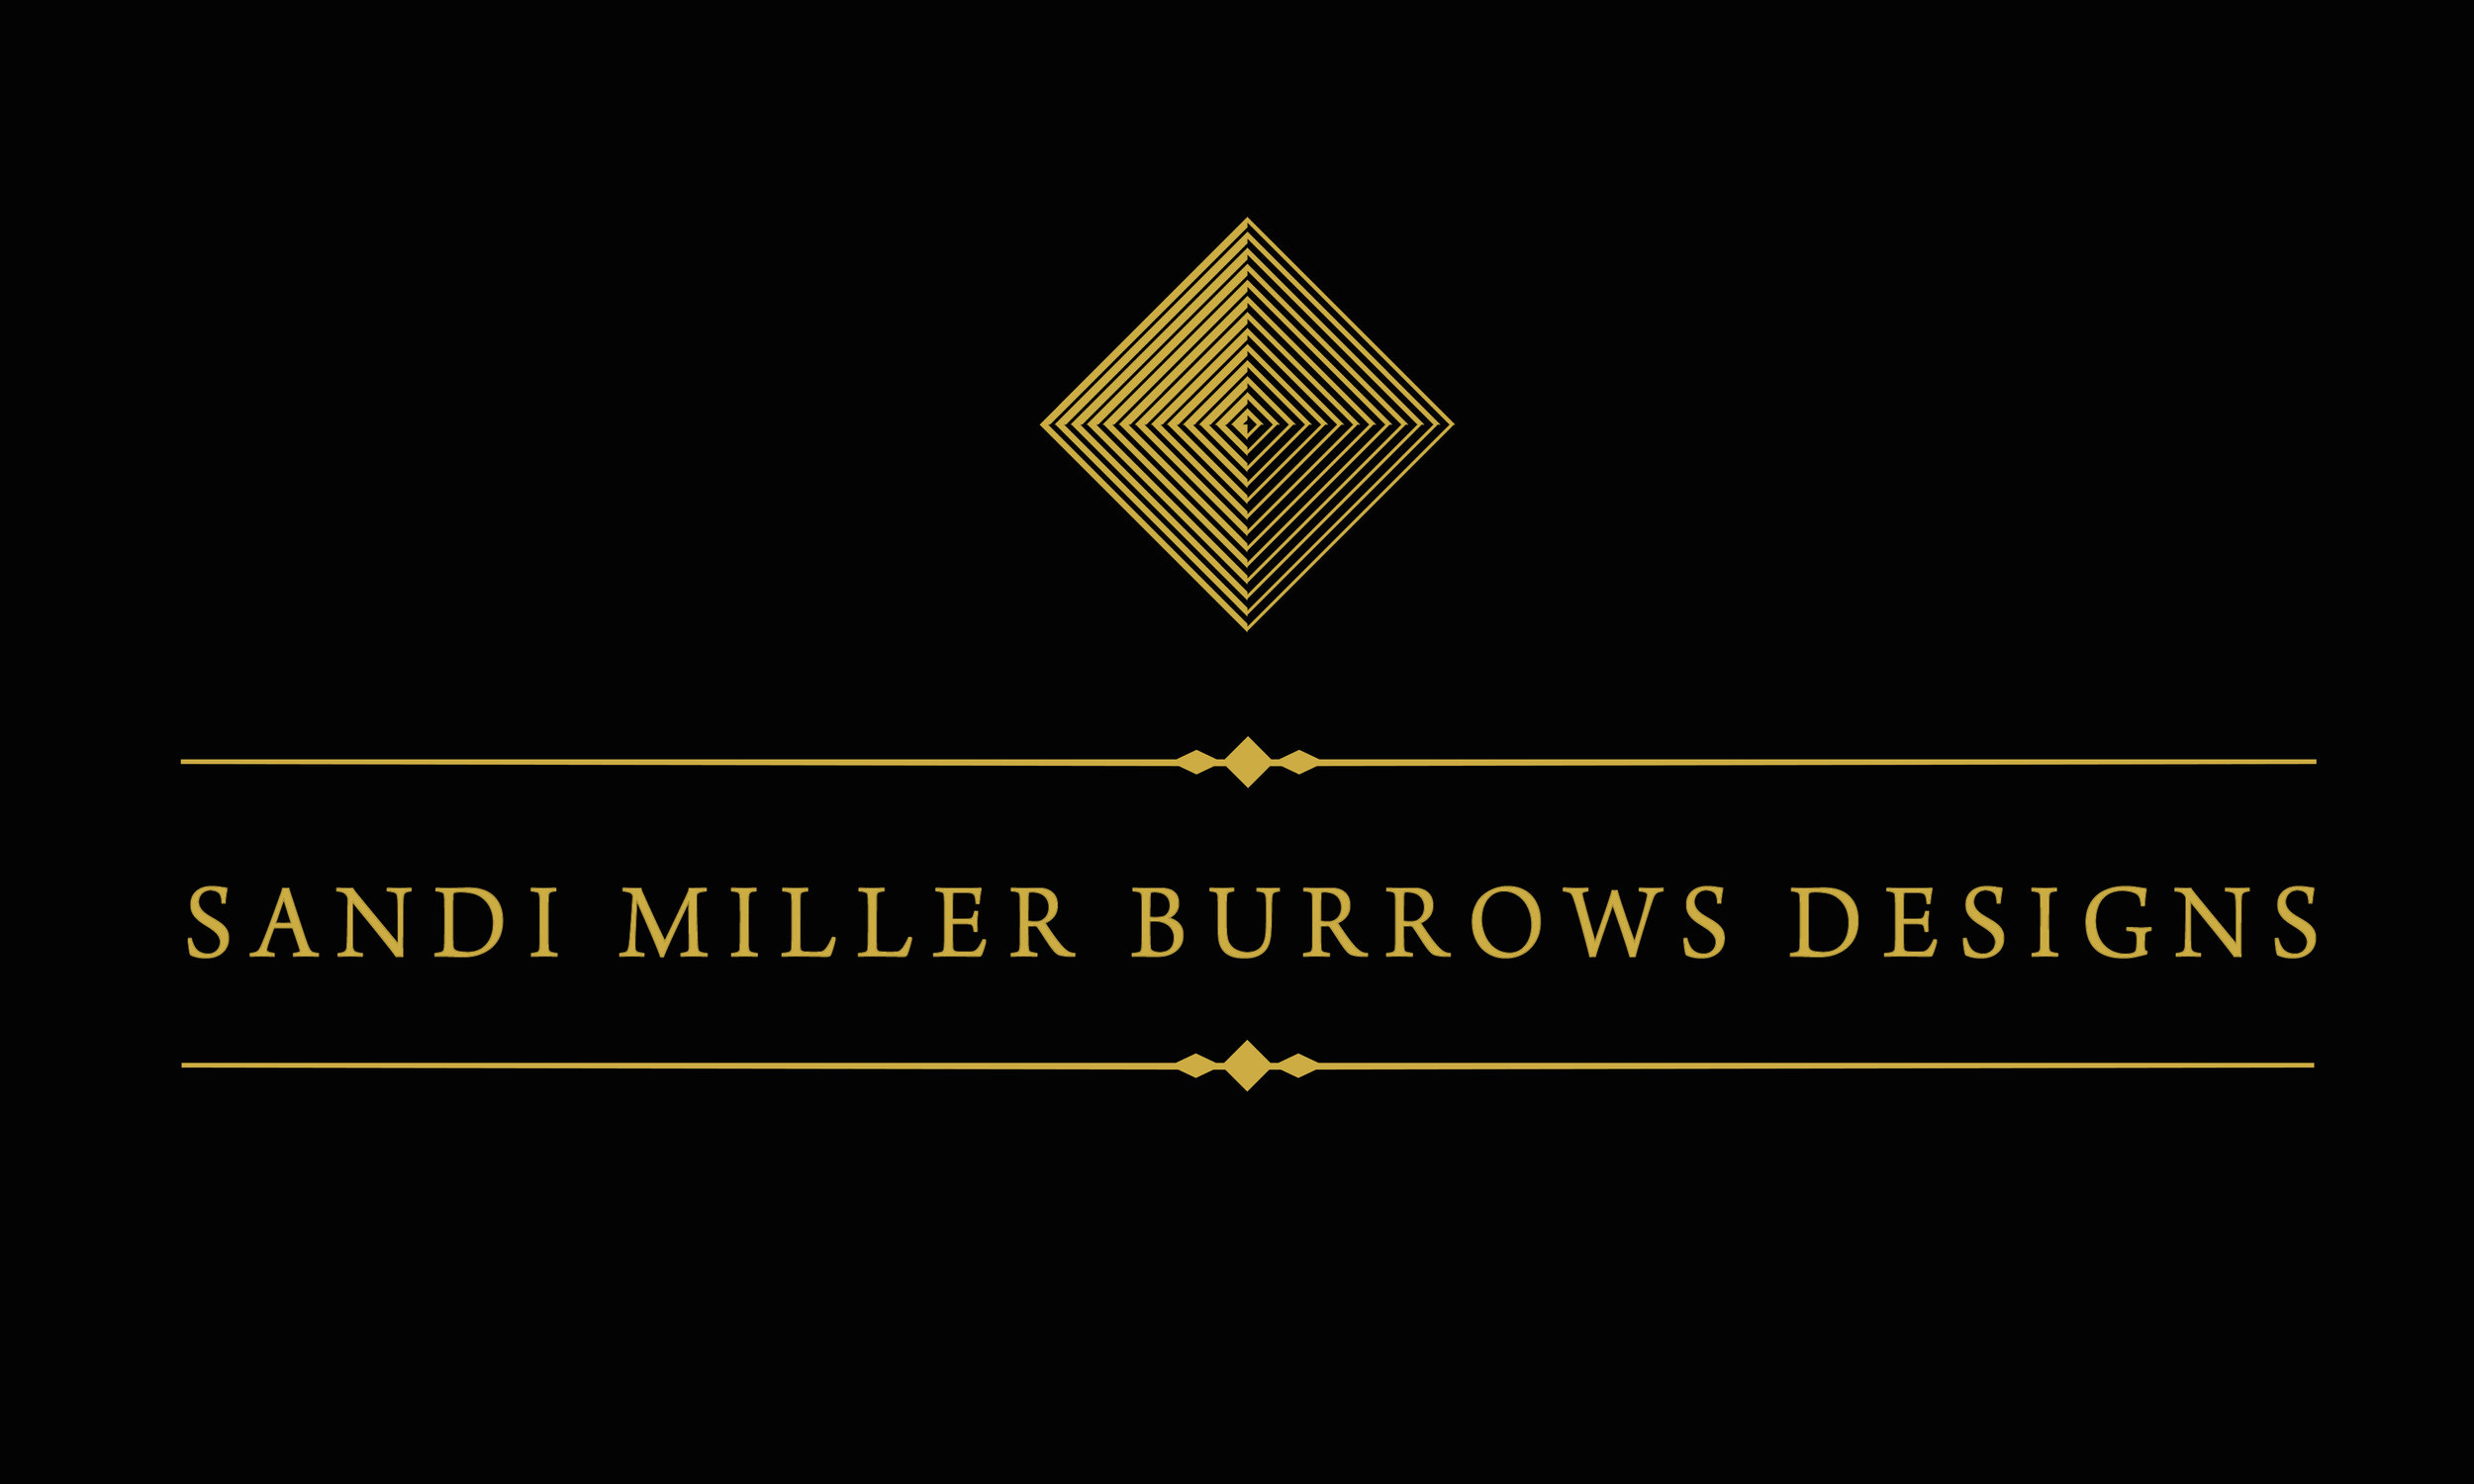 SandiMillerBurrows real logo gold 4 .jpg